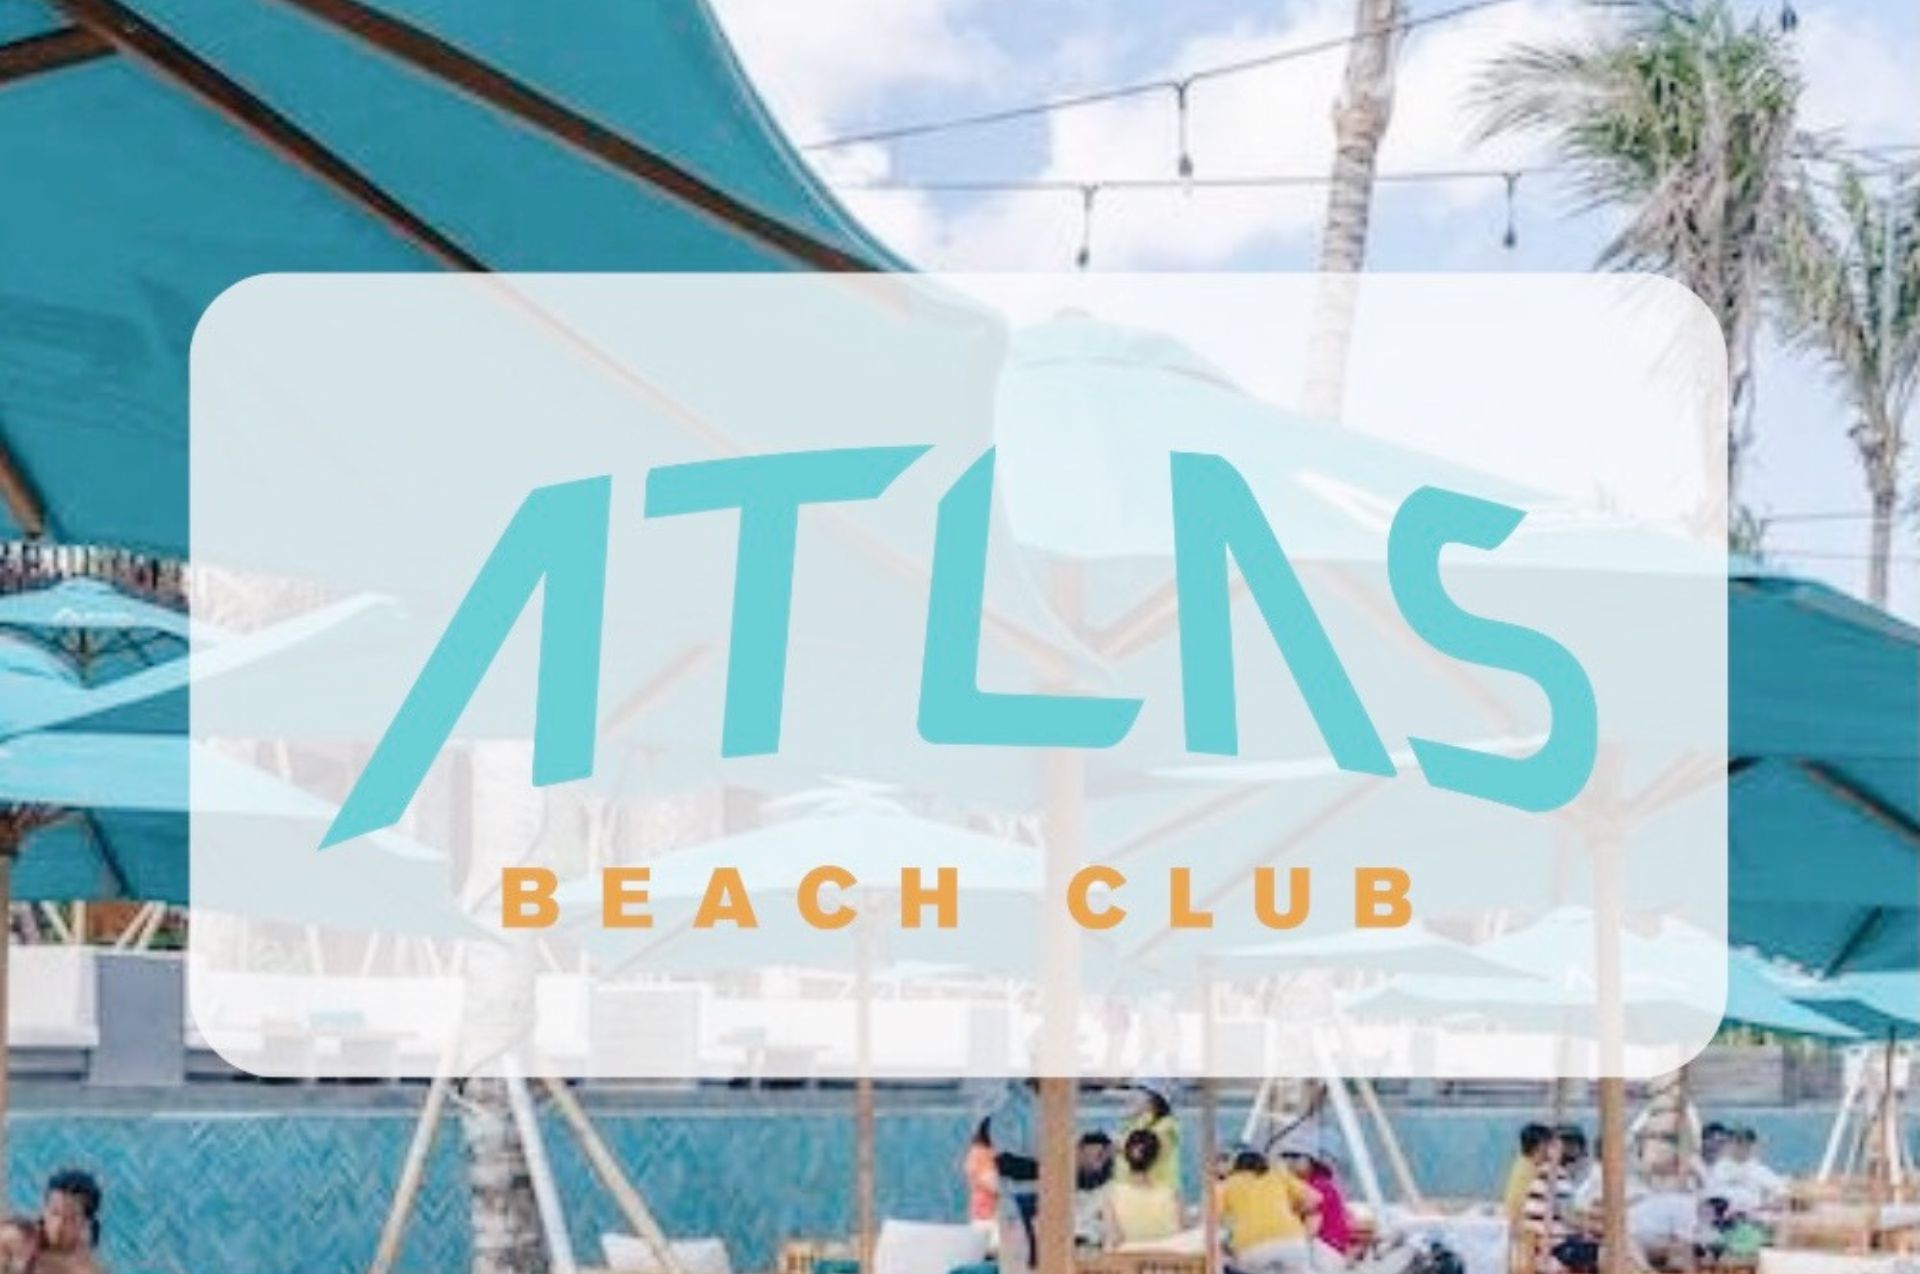 Atlas Beach Club